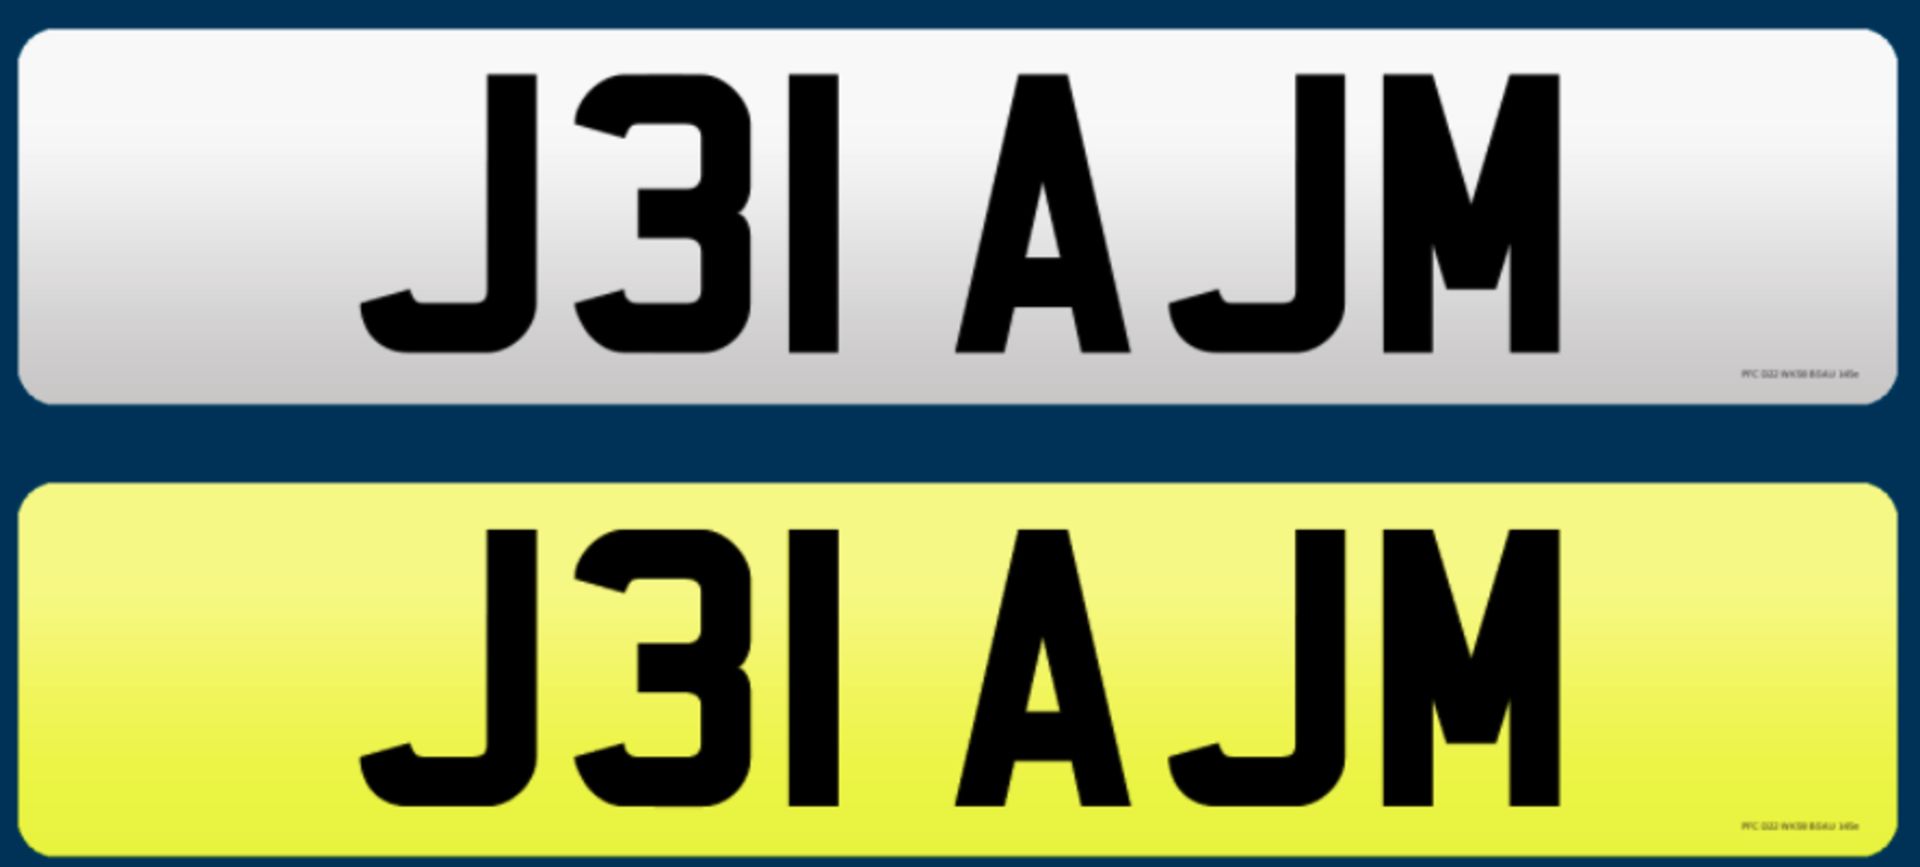 J31 AJM - Cherished Plate On Retention